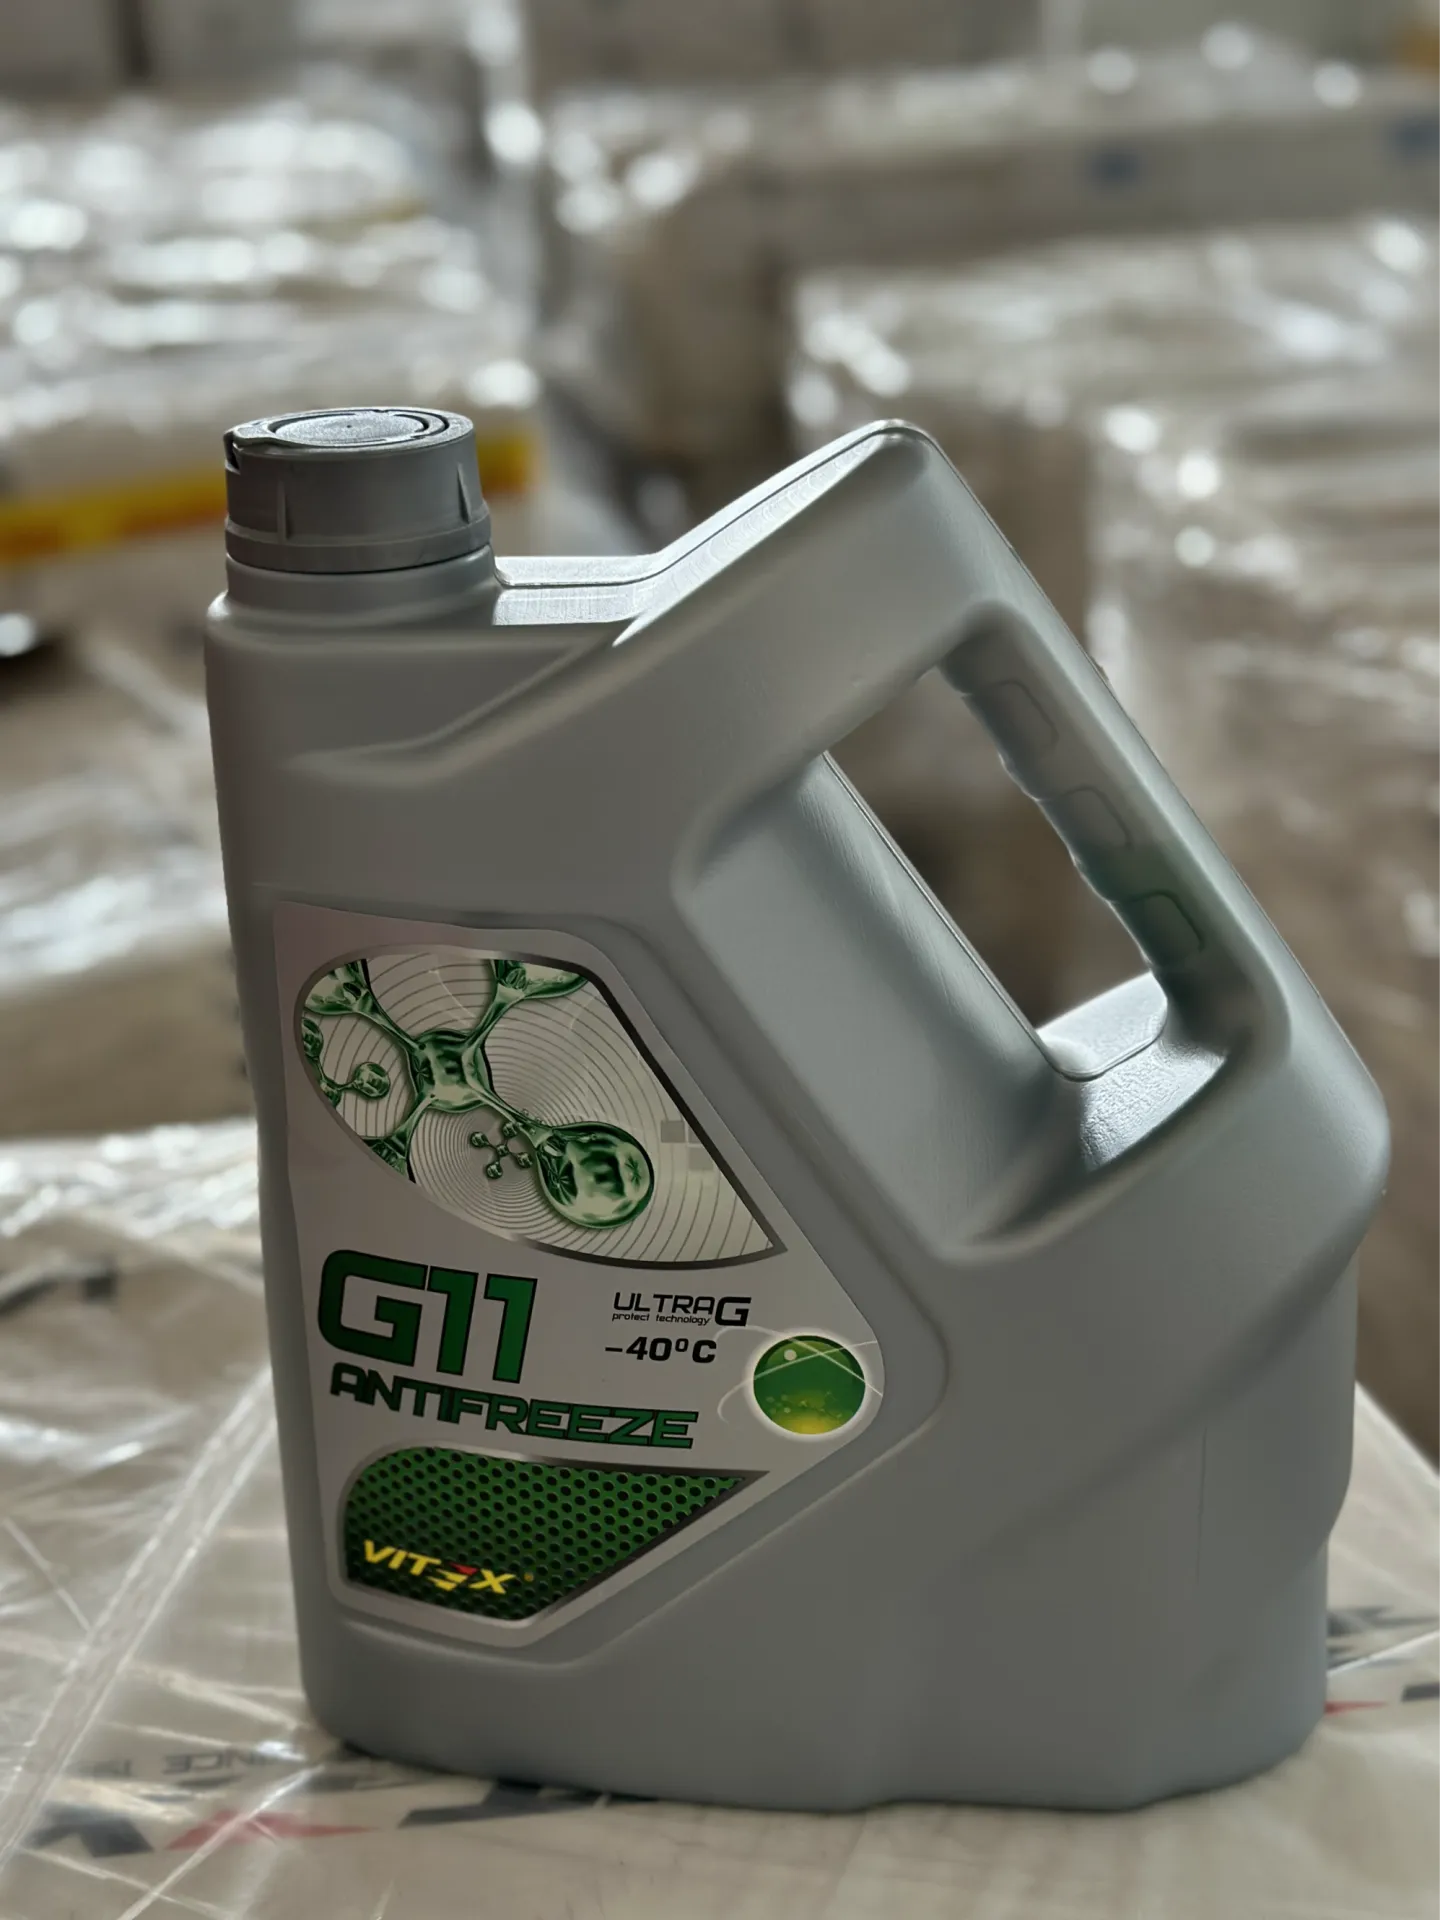 Антифриз Antifreeze «Vitex G11-40 Ultra G» (10 кг.) Цвет: зеленый#1